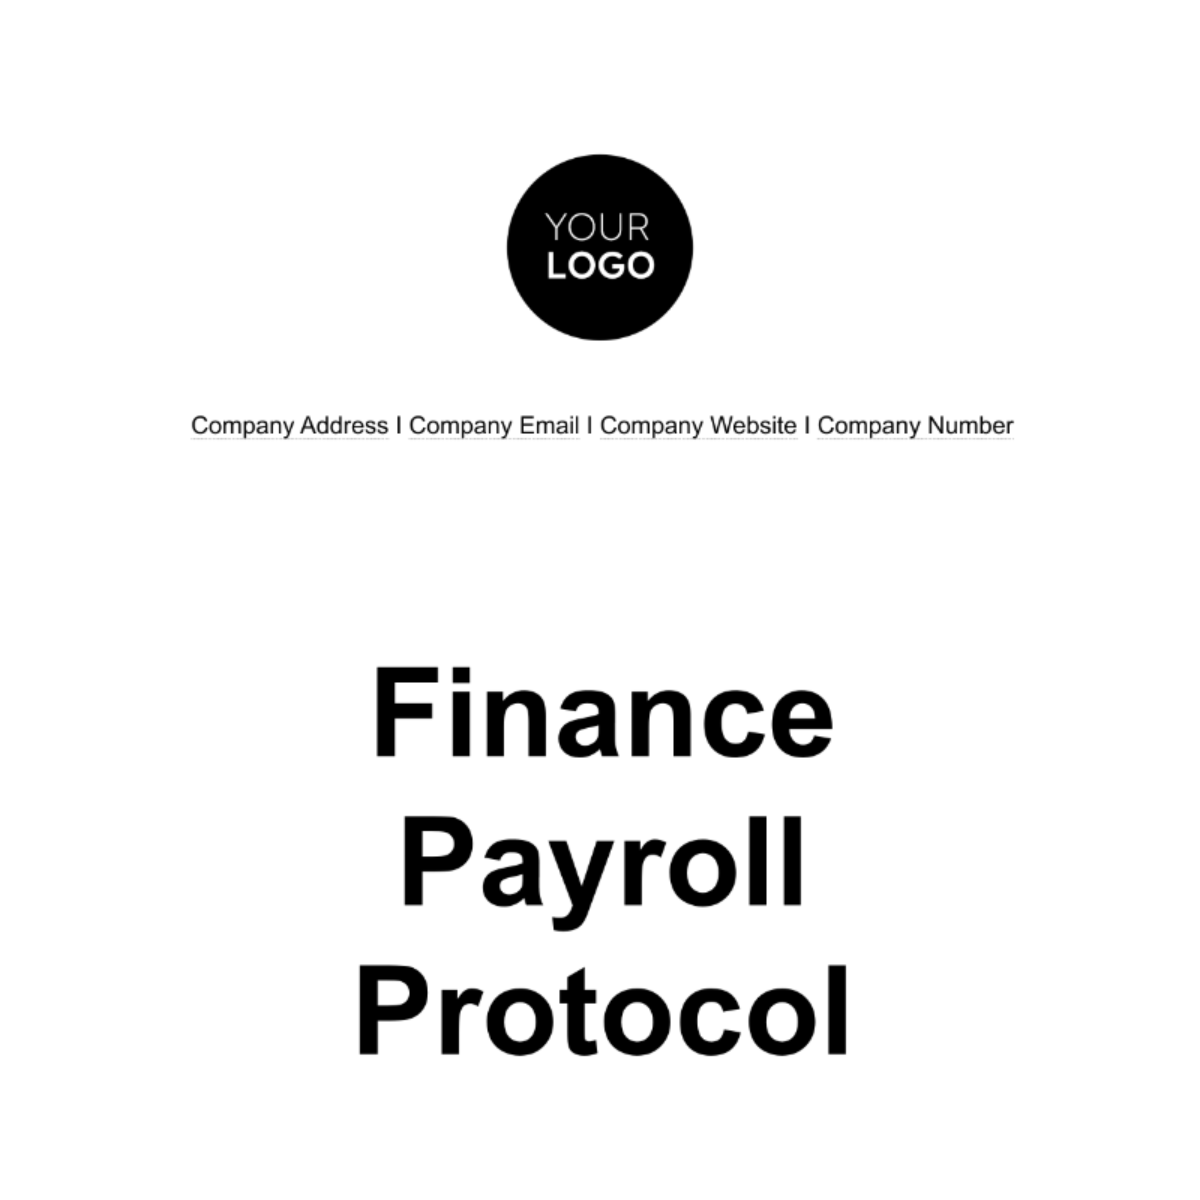 Finance Payroll Protocol Template